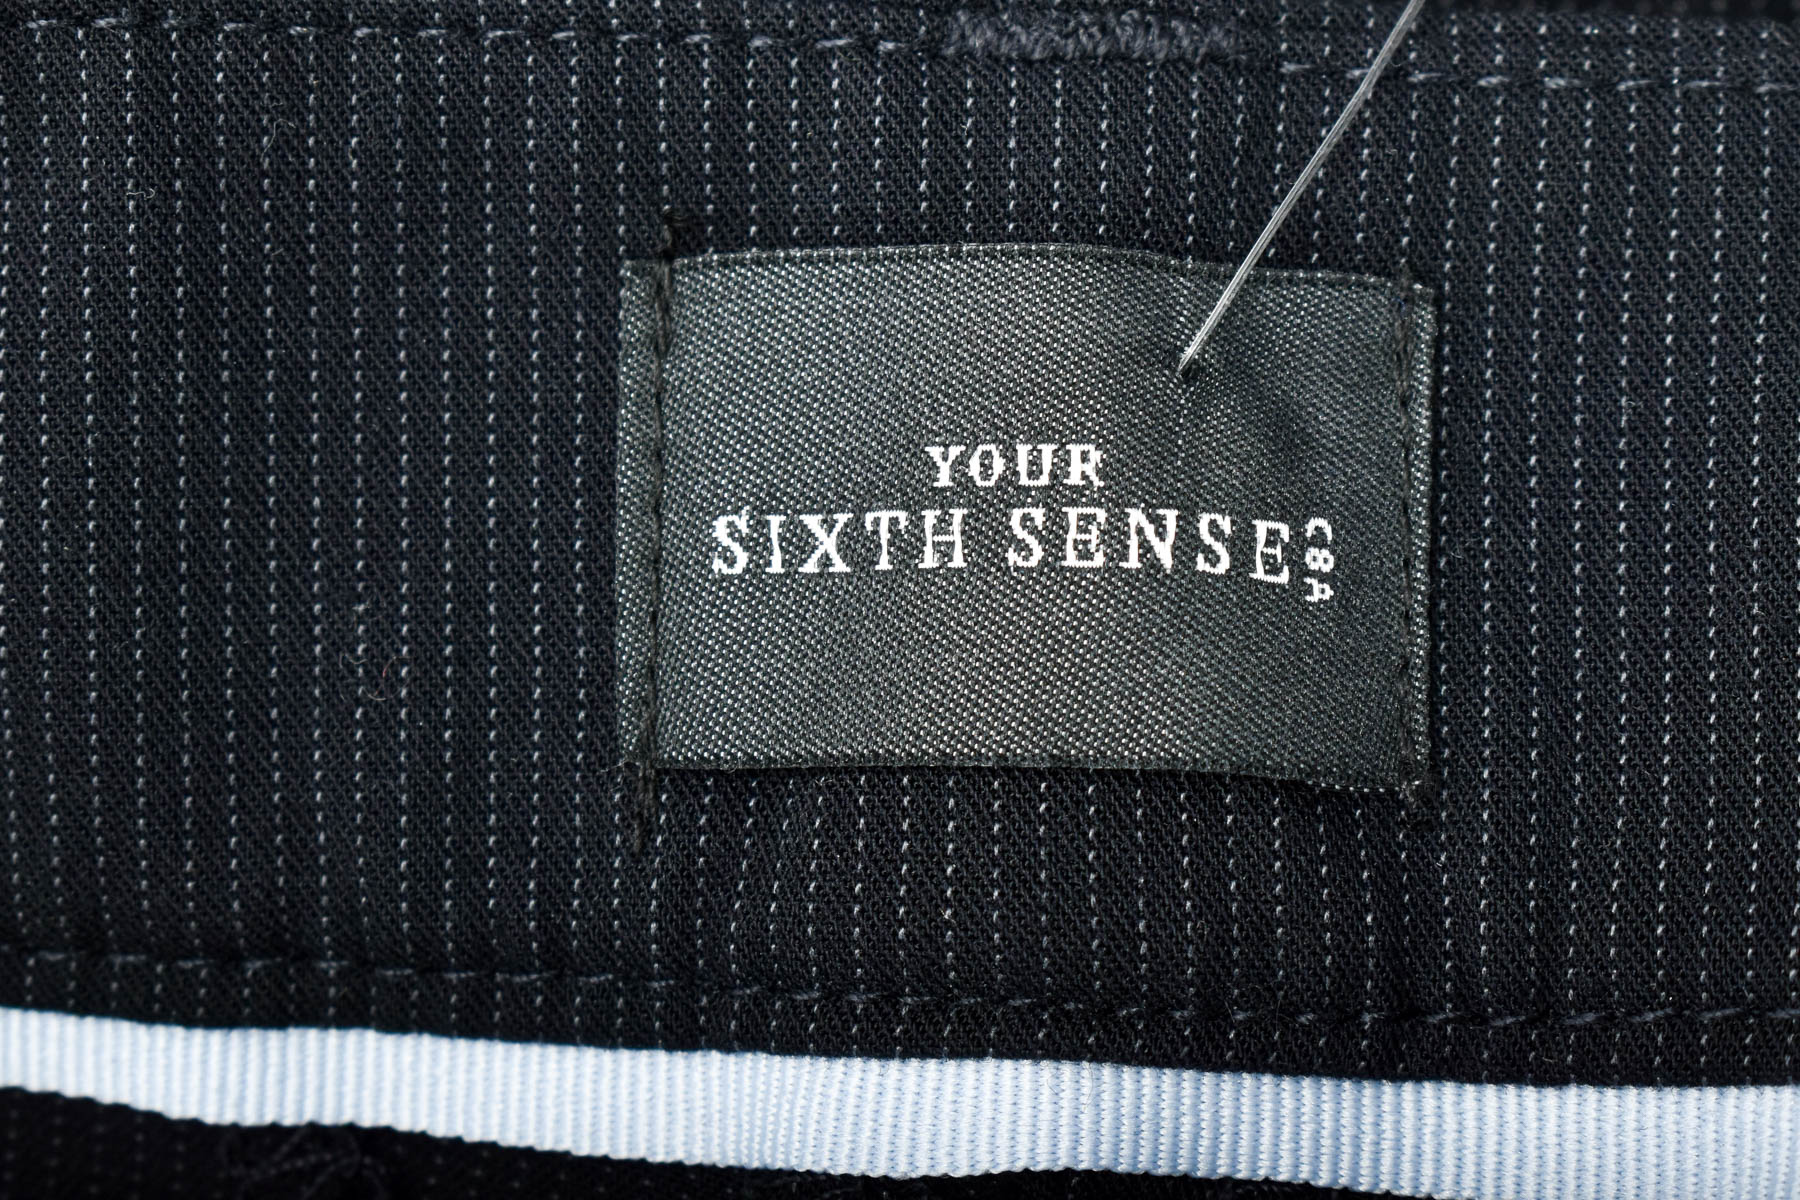 Pantaloni de damă - Your Sixth Sense - 2